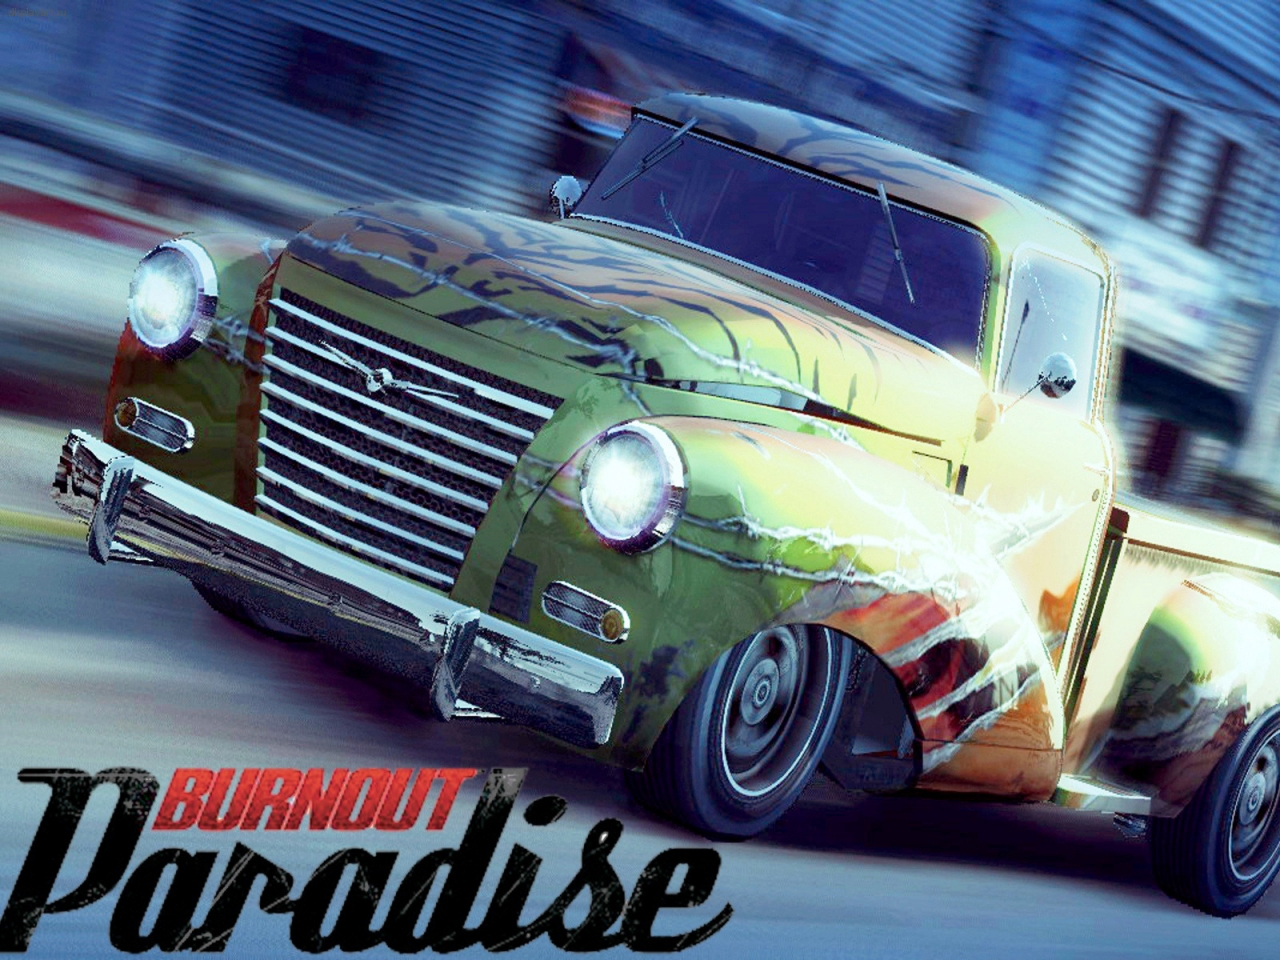 Burnout Paradise Car for 1280 x 960 resolution